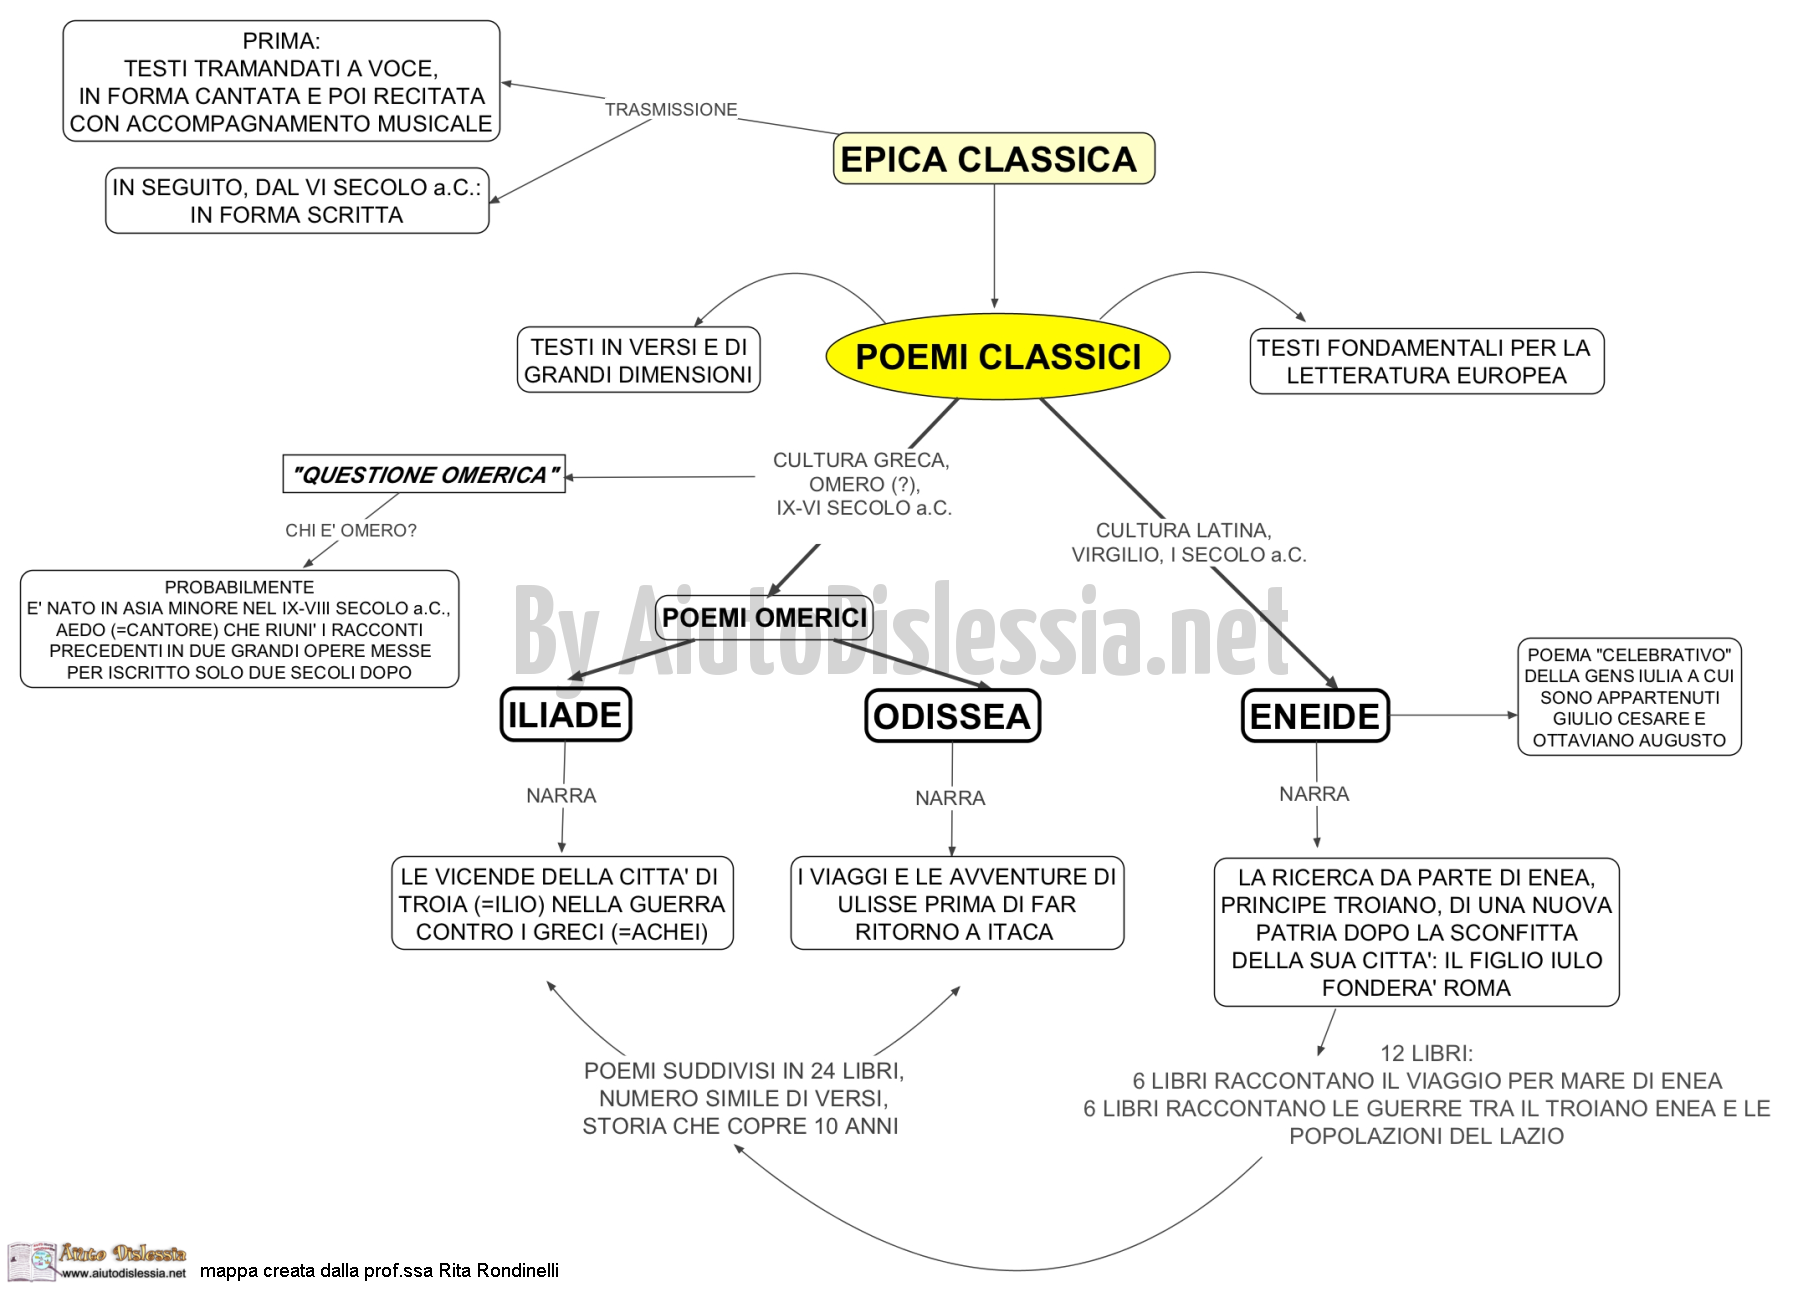 EPICA CLASSICA